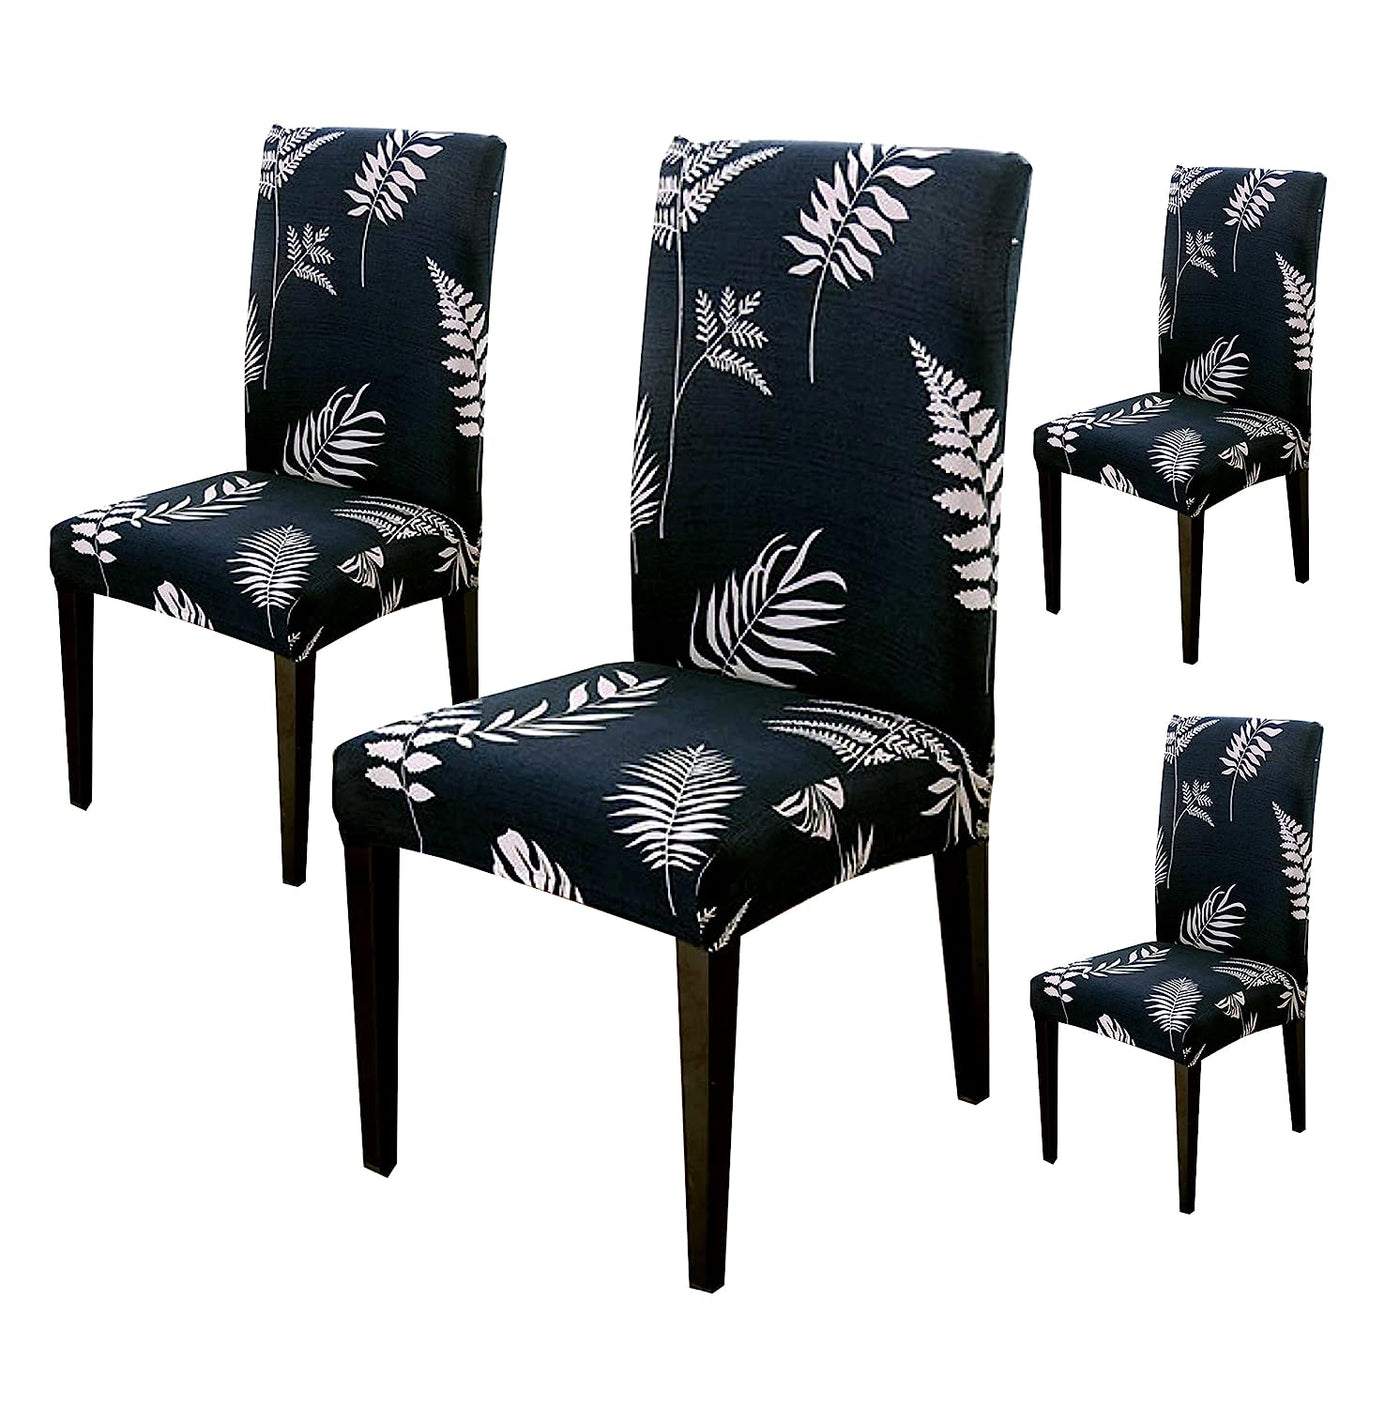 Printed Chair Cover-(Dark Blue Petals)